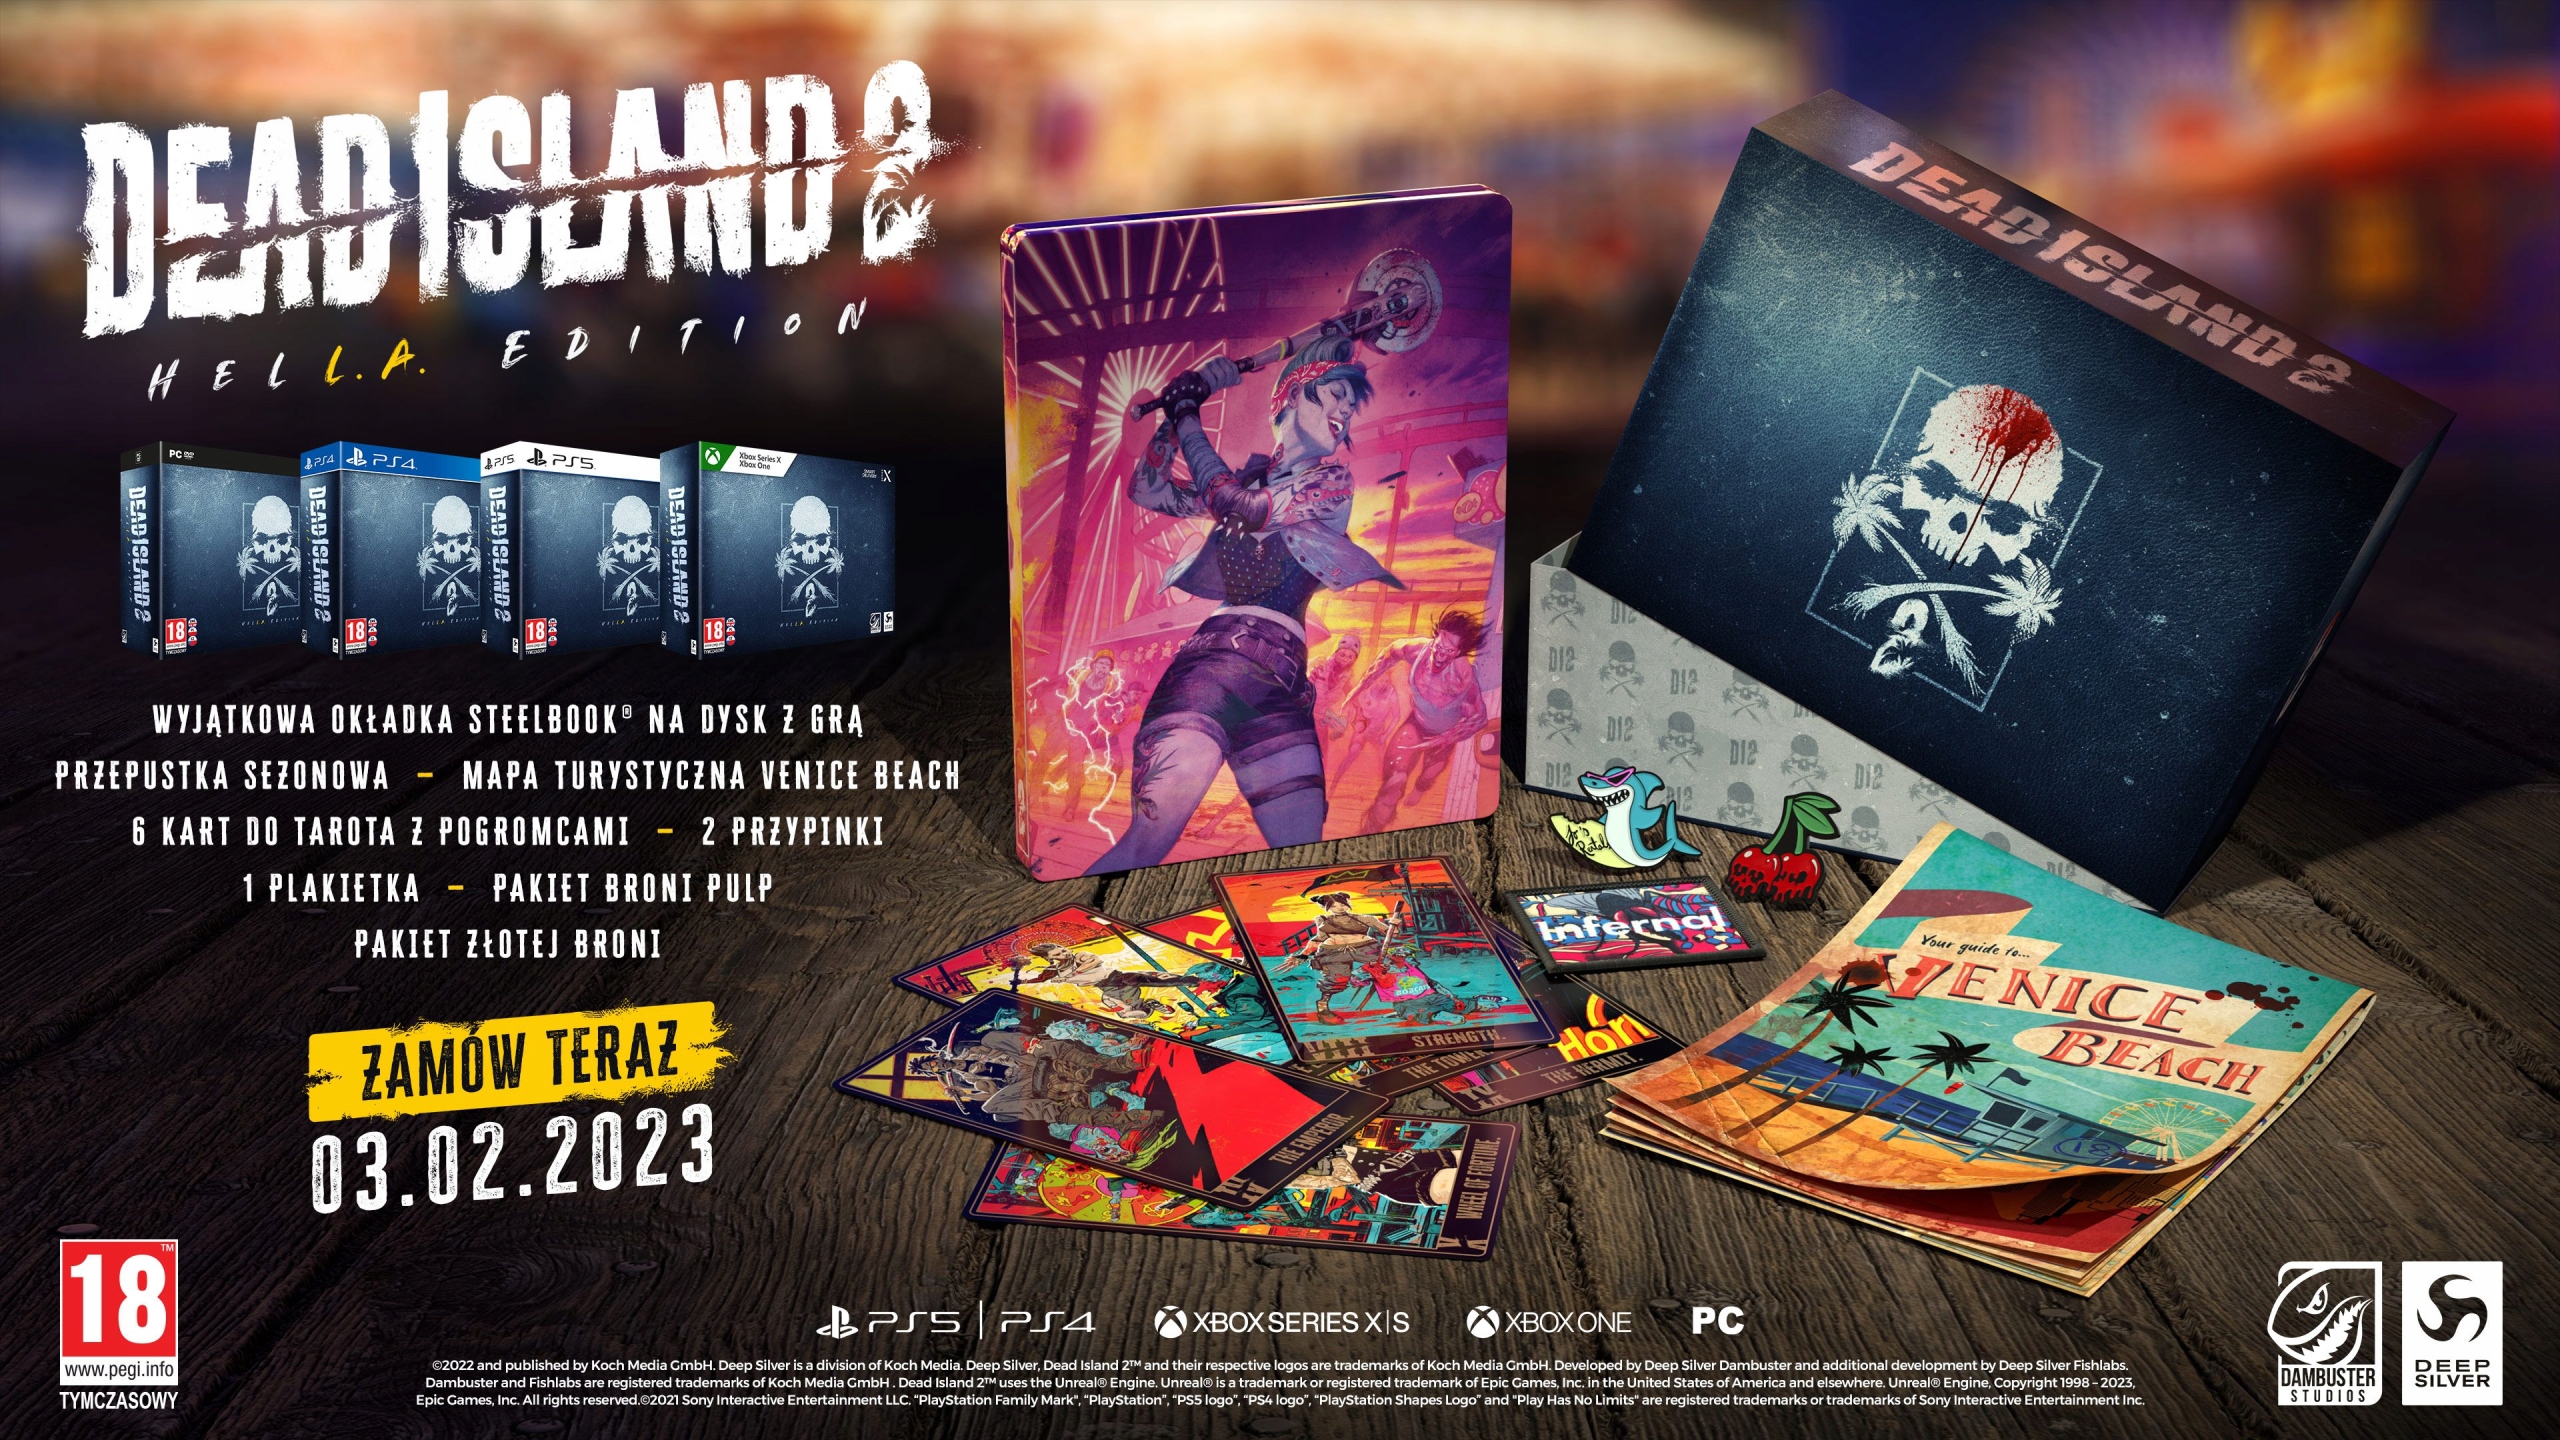 Pulp edition dead island. Dead Island 2 коллекционное издание. Коллекционное издание дед Айленд 2. Коллекционка дед Айланд 2.